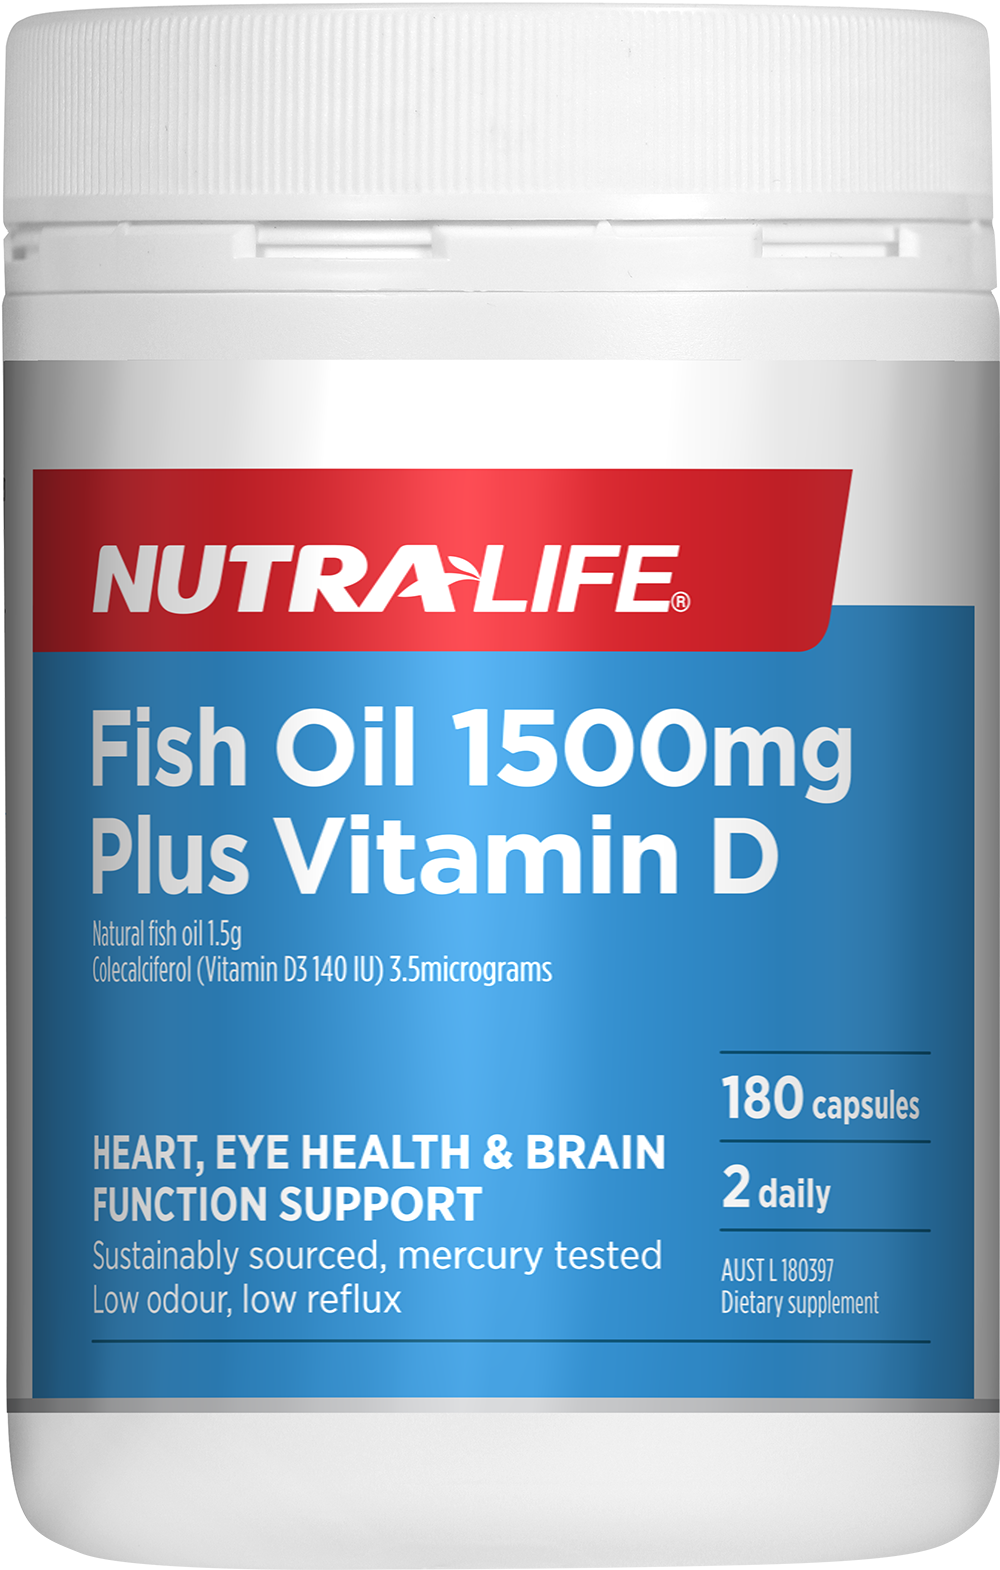 Nutralife Omega 3 Fish Oil 1500 mg Plus Vitamin D 180 Capsules